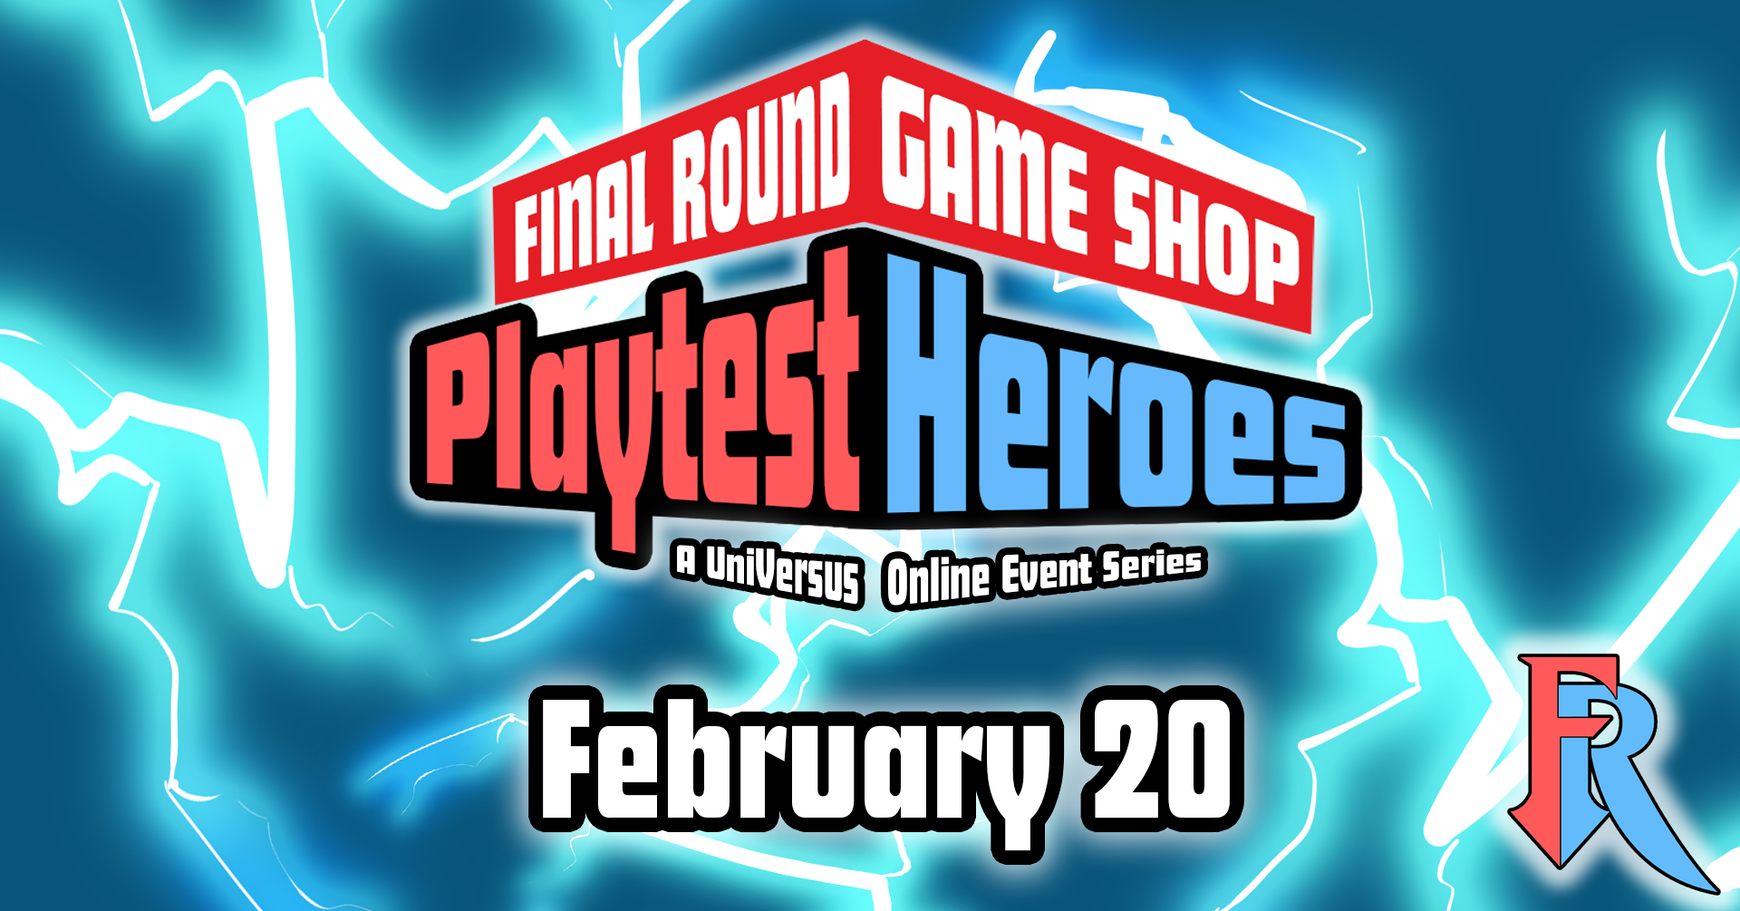 Playtest Heroes - An Online UniVersus Event Series!